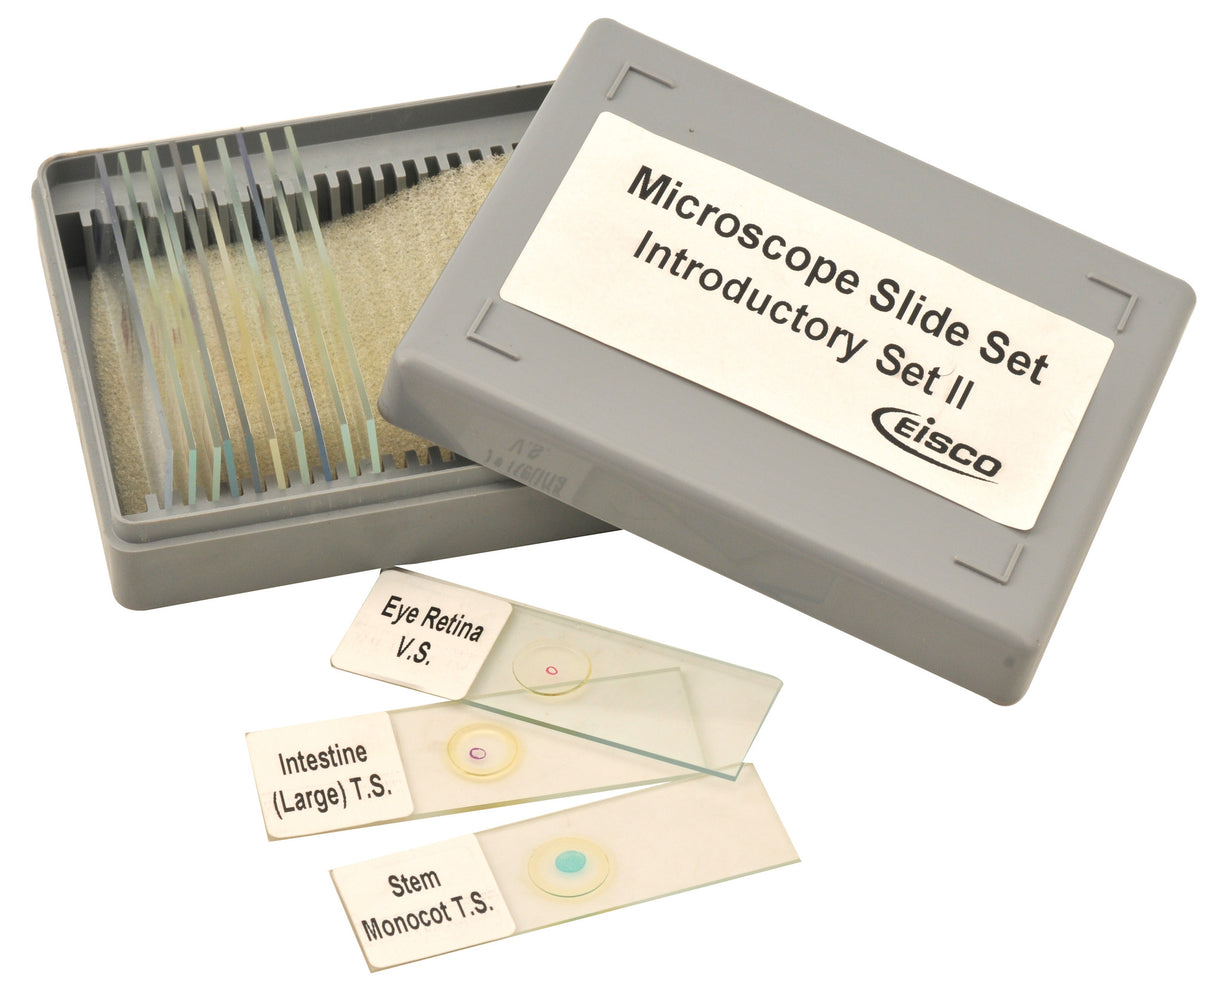 Microscope Slide Set - Introductory Set No. II, Set of 12